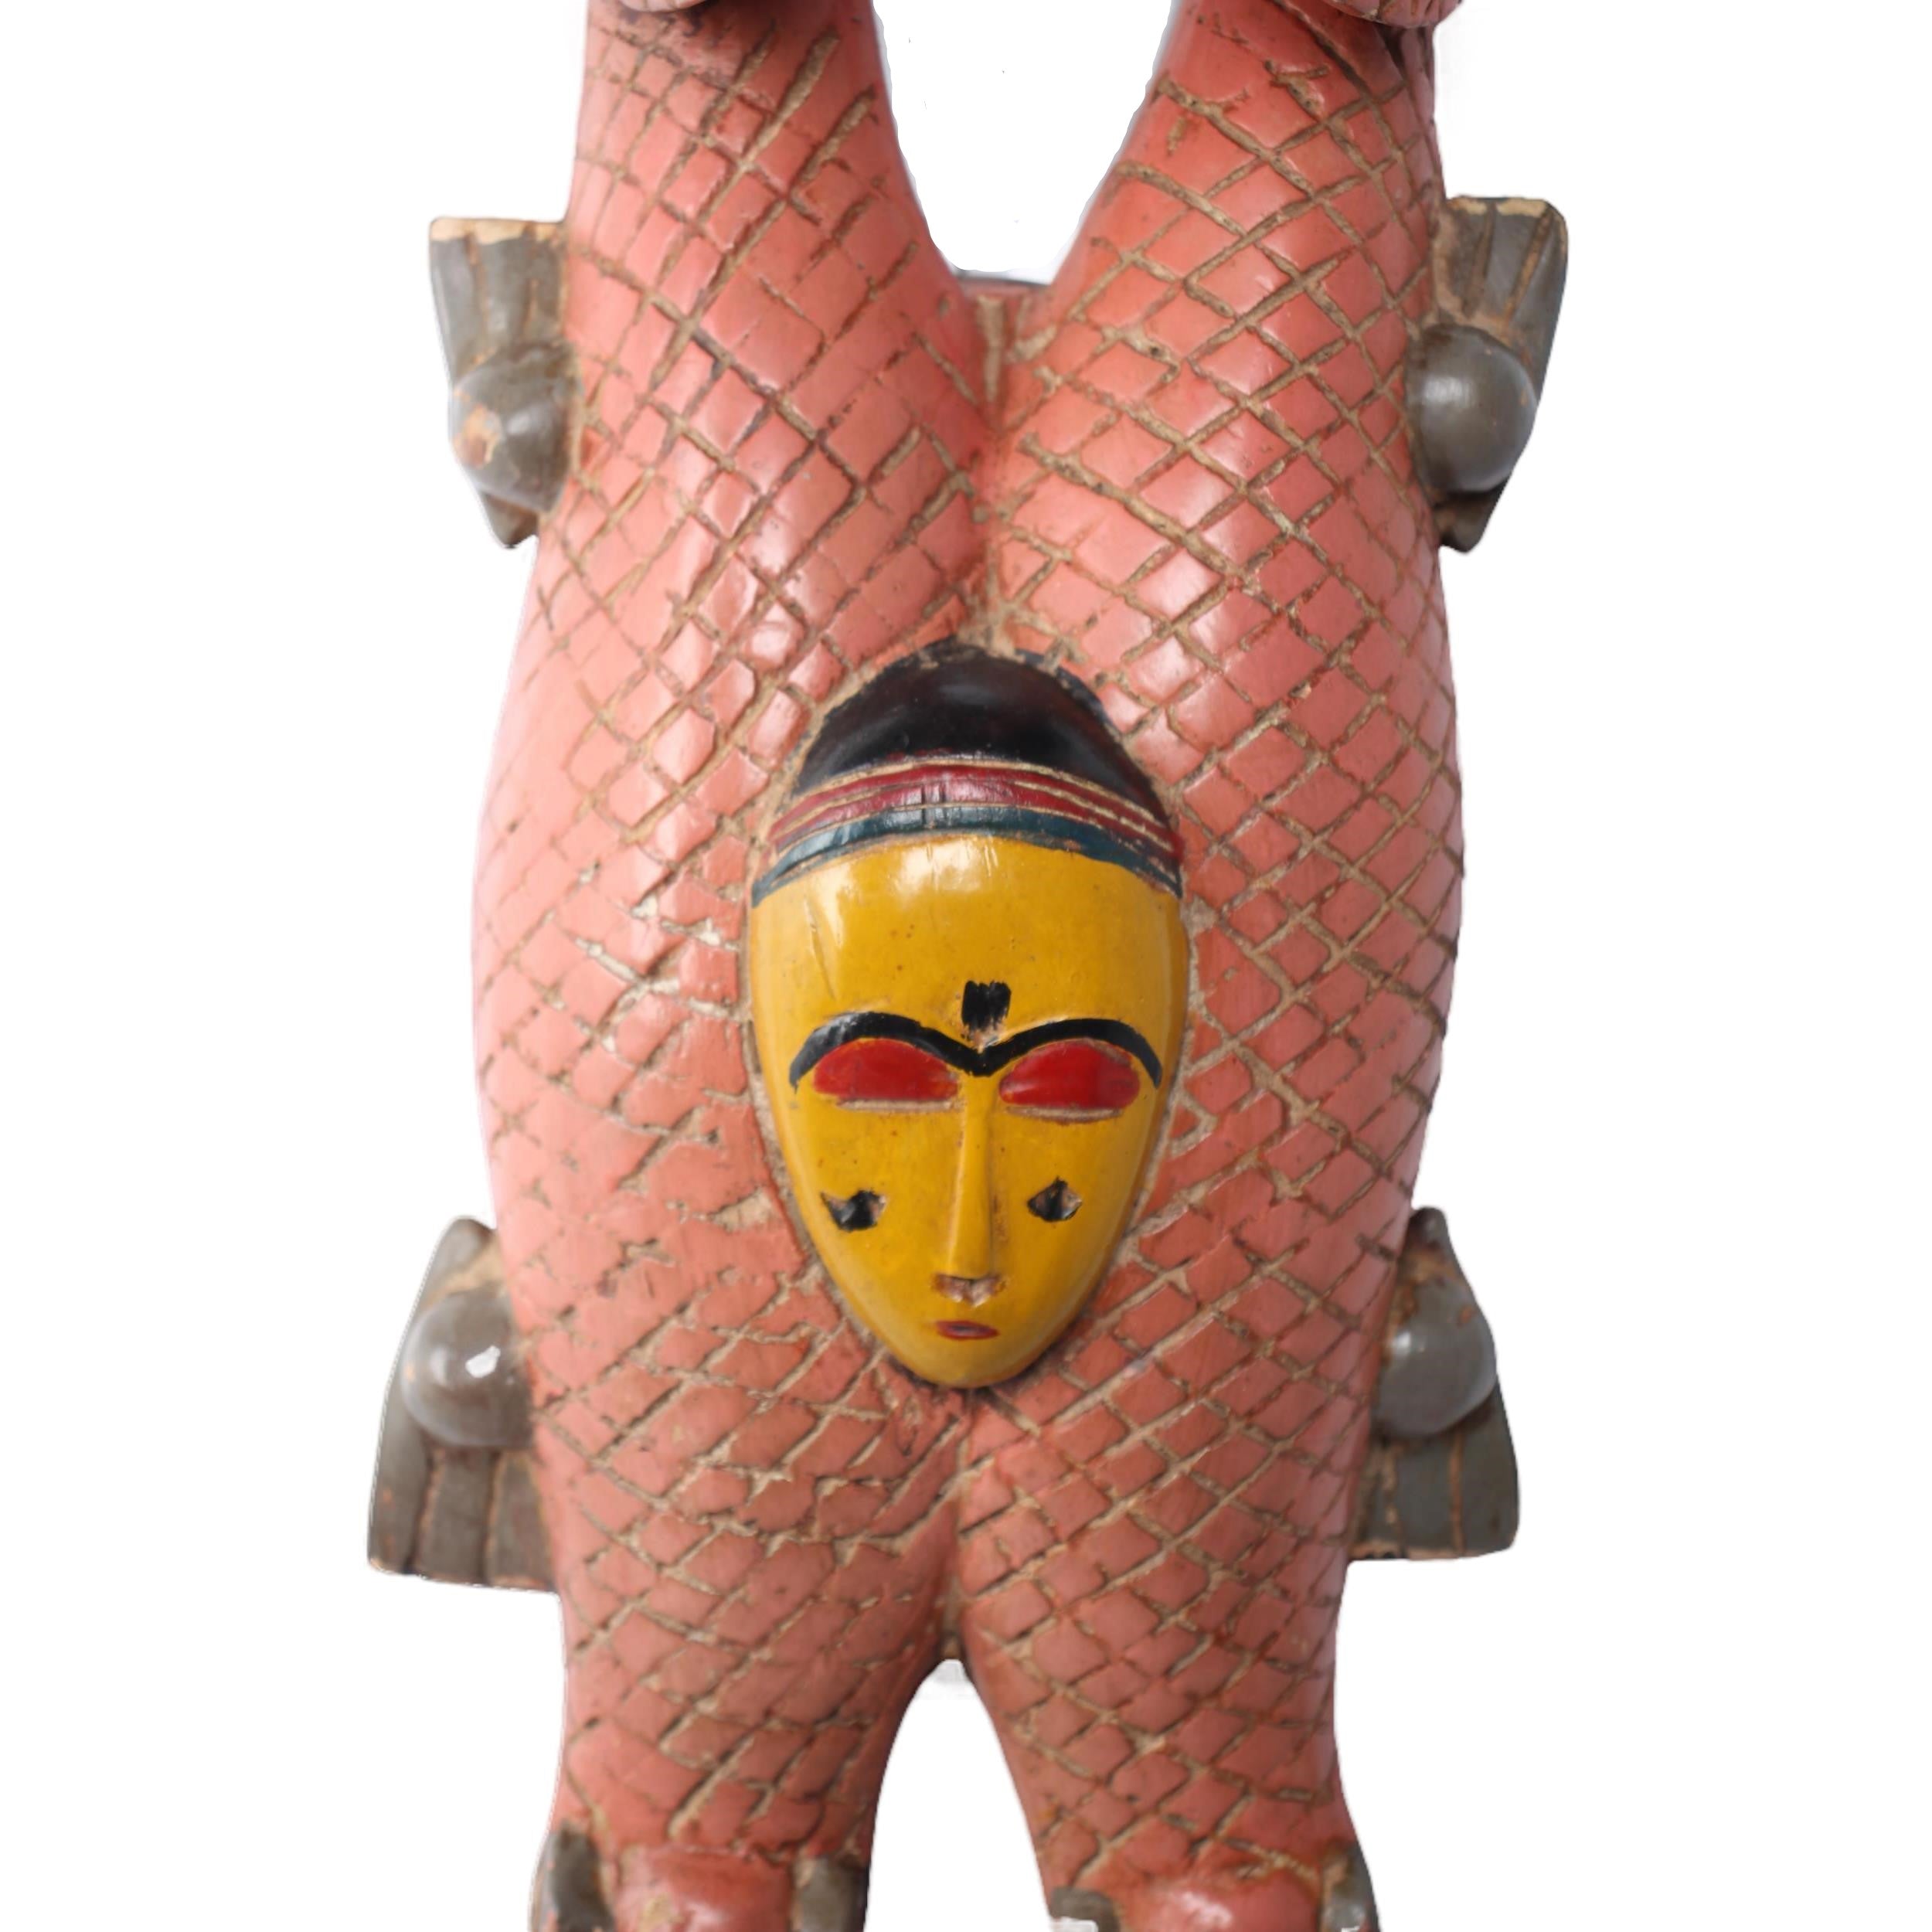 Guro Tribe Mask ~21.7" Tall - Mask